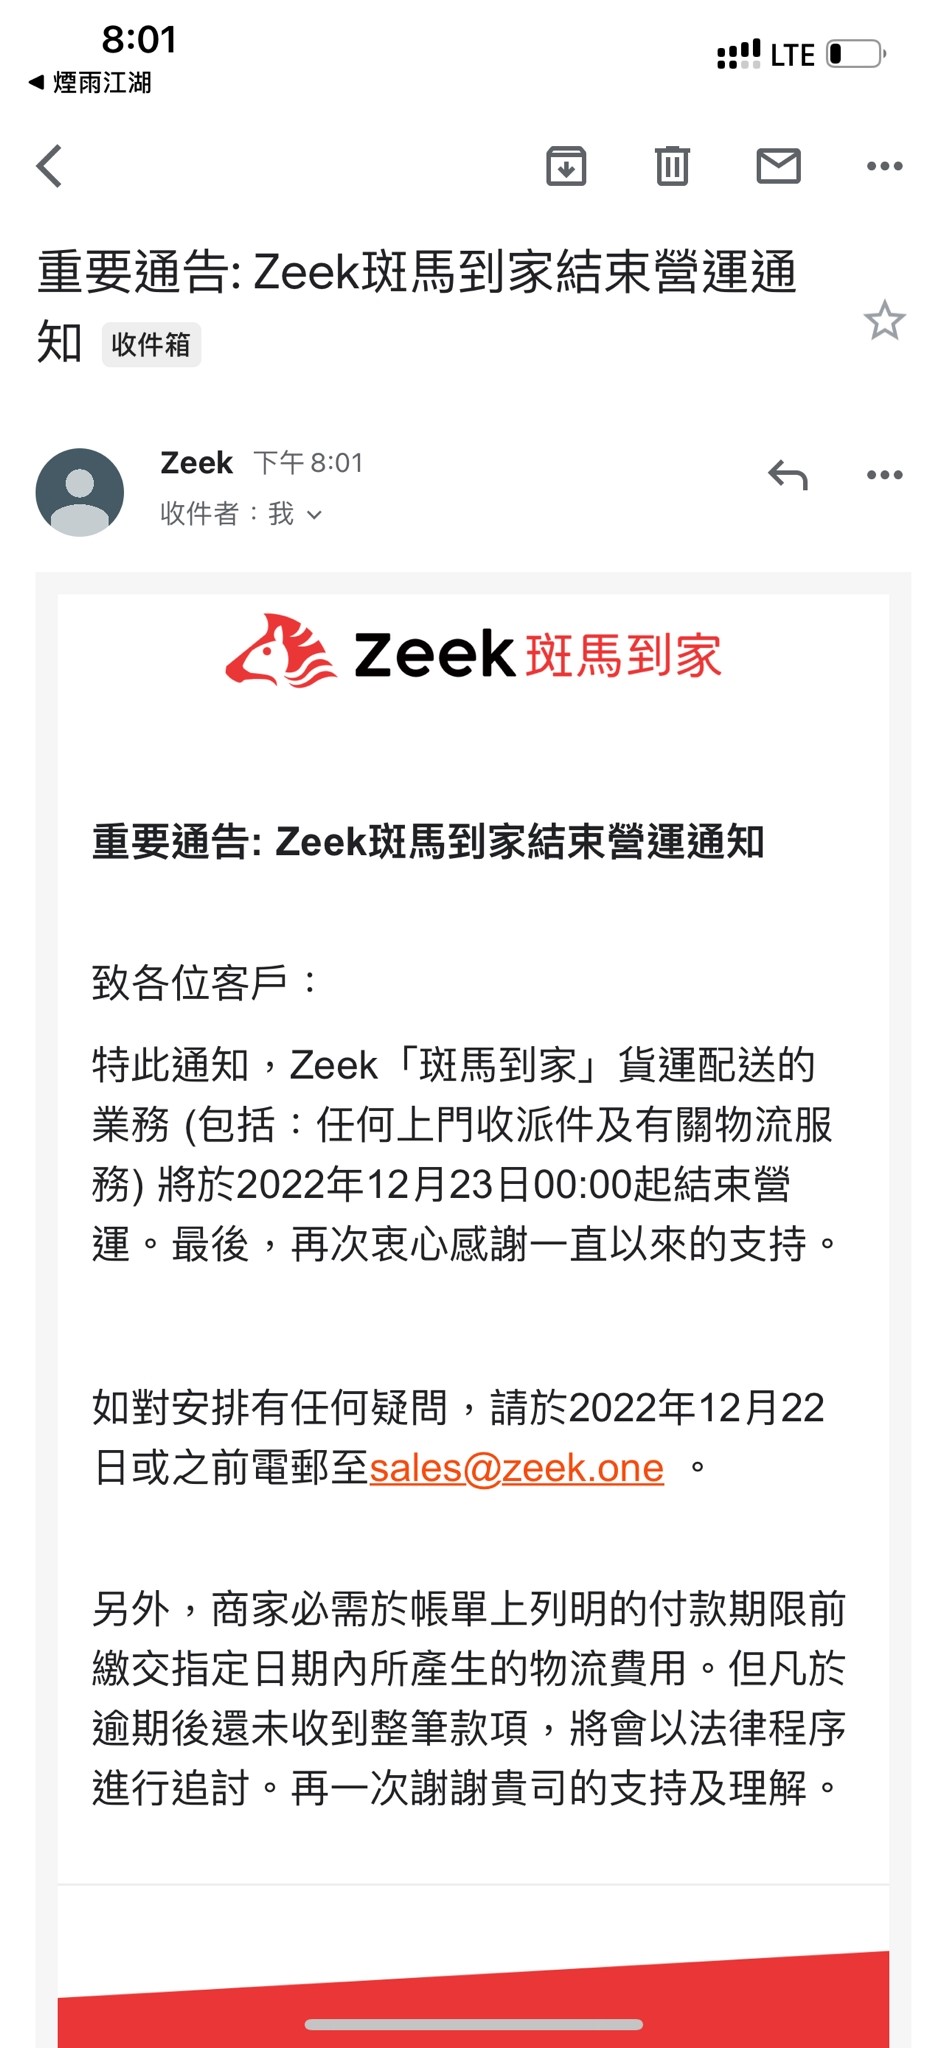 Zeek（斑马到家）的电邮内容。